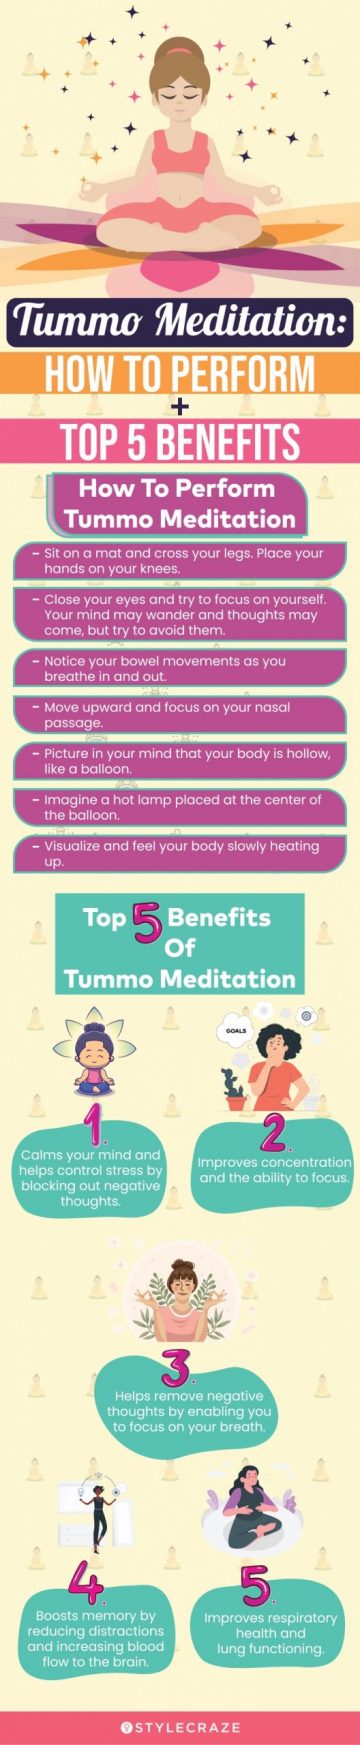 tumma meditation: how to perform + top 5 benefits (infographic)